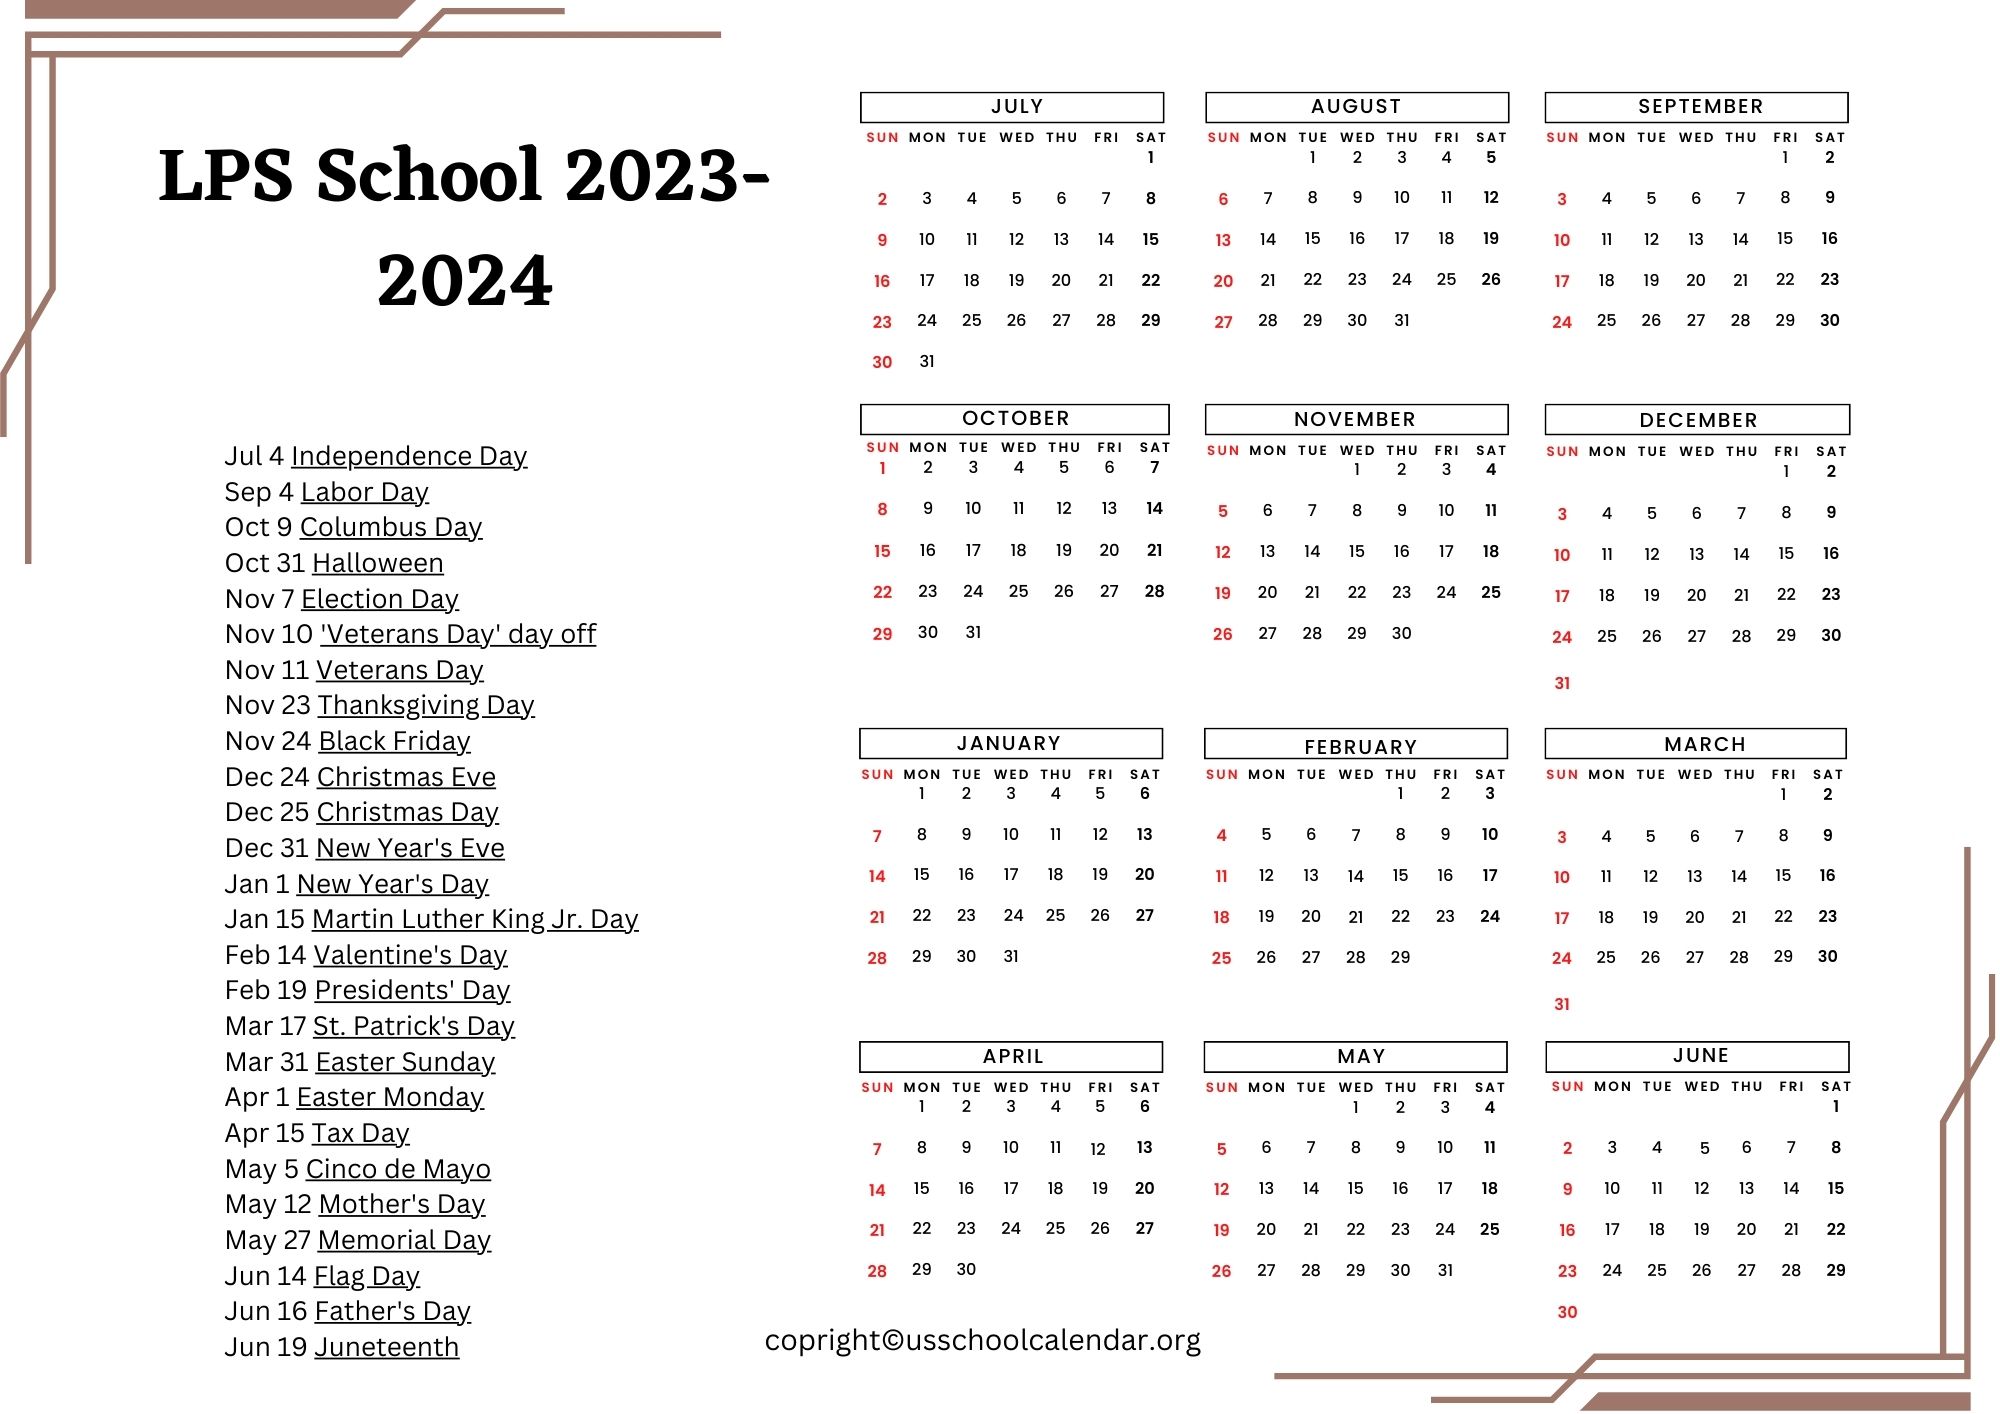 LPS School Calendar with Holidays 2324 [Lincoln Public Schools]